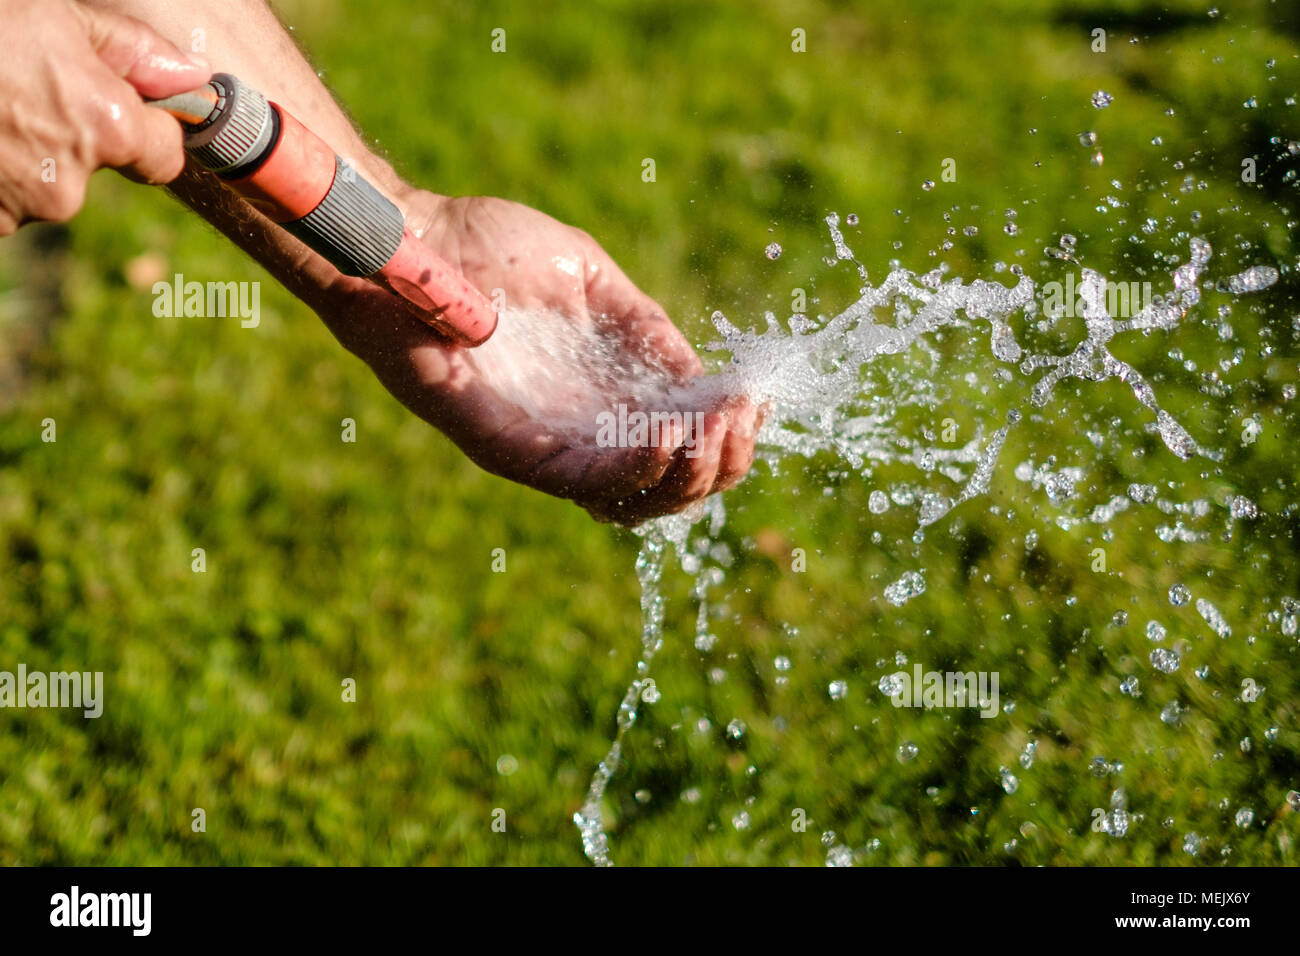 watering garden ,  holding water hose washing hand Stock Photo